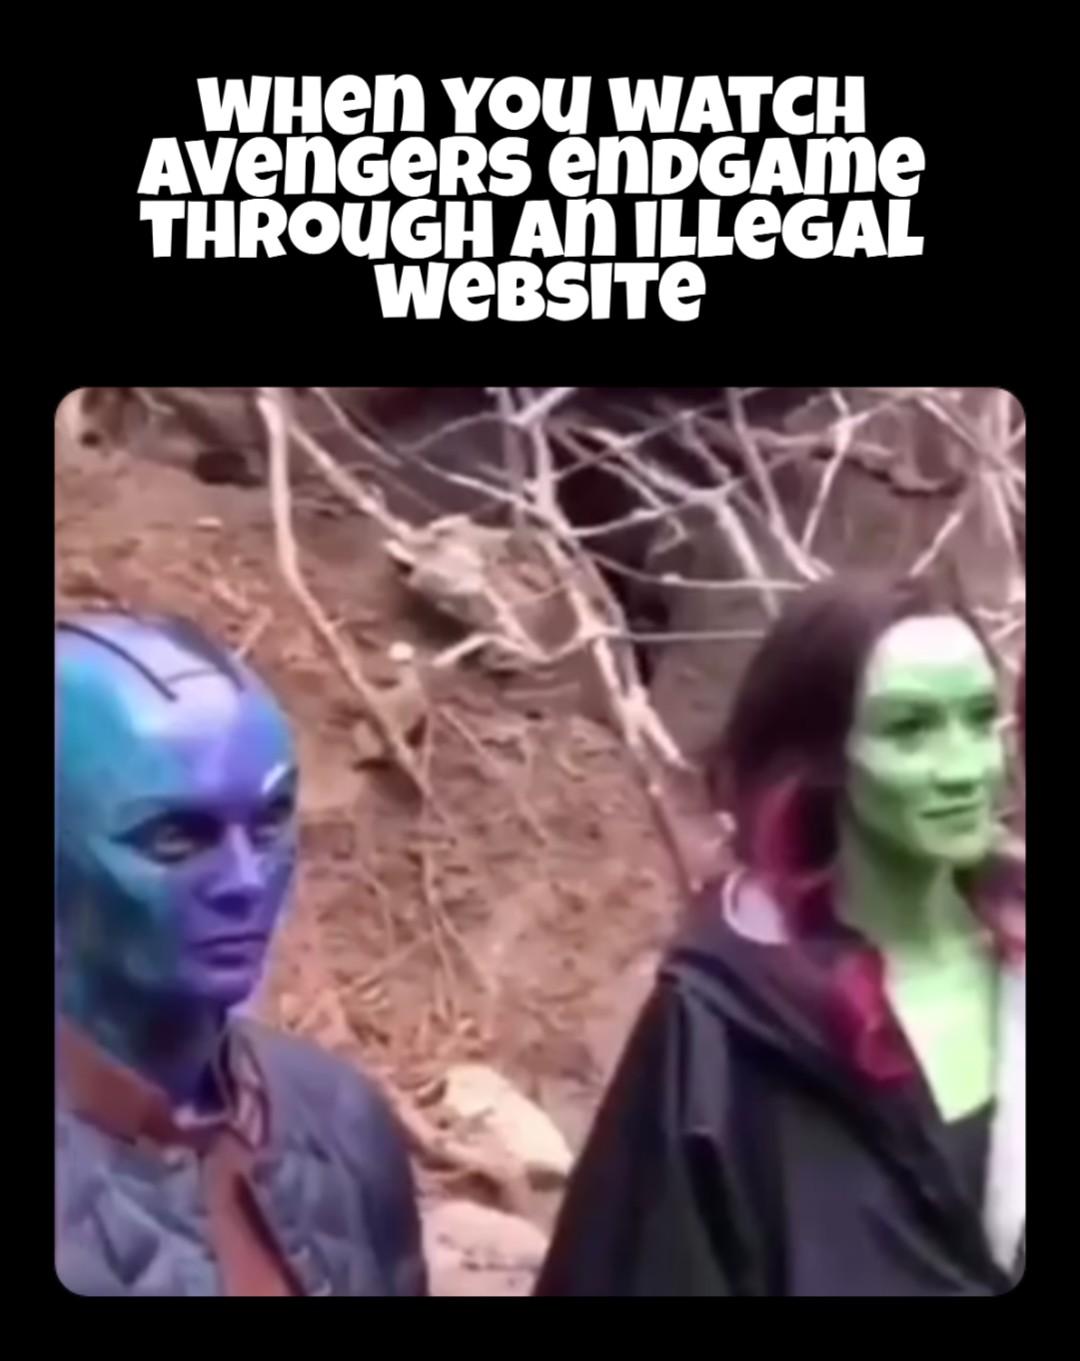 Avengers Endgame memes - human - When You Watch Avengers enDGAME Through An Illegal Website